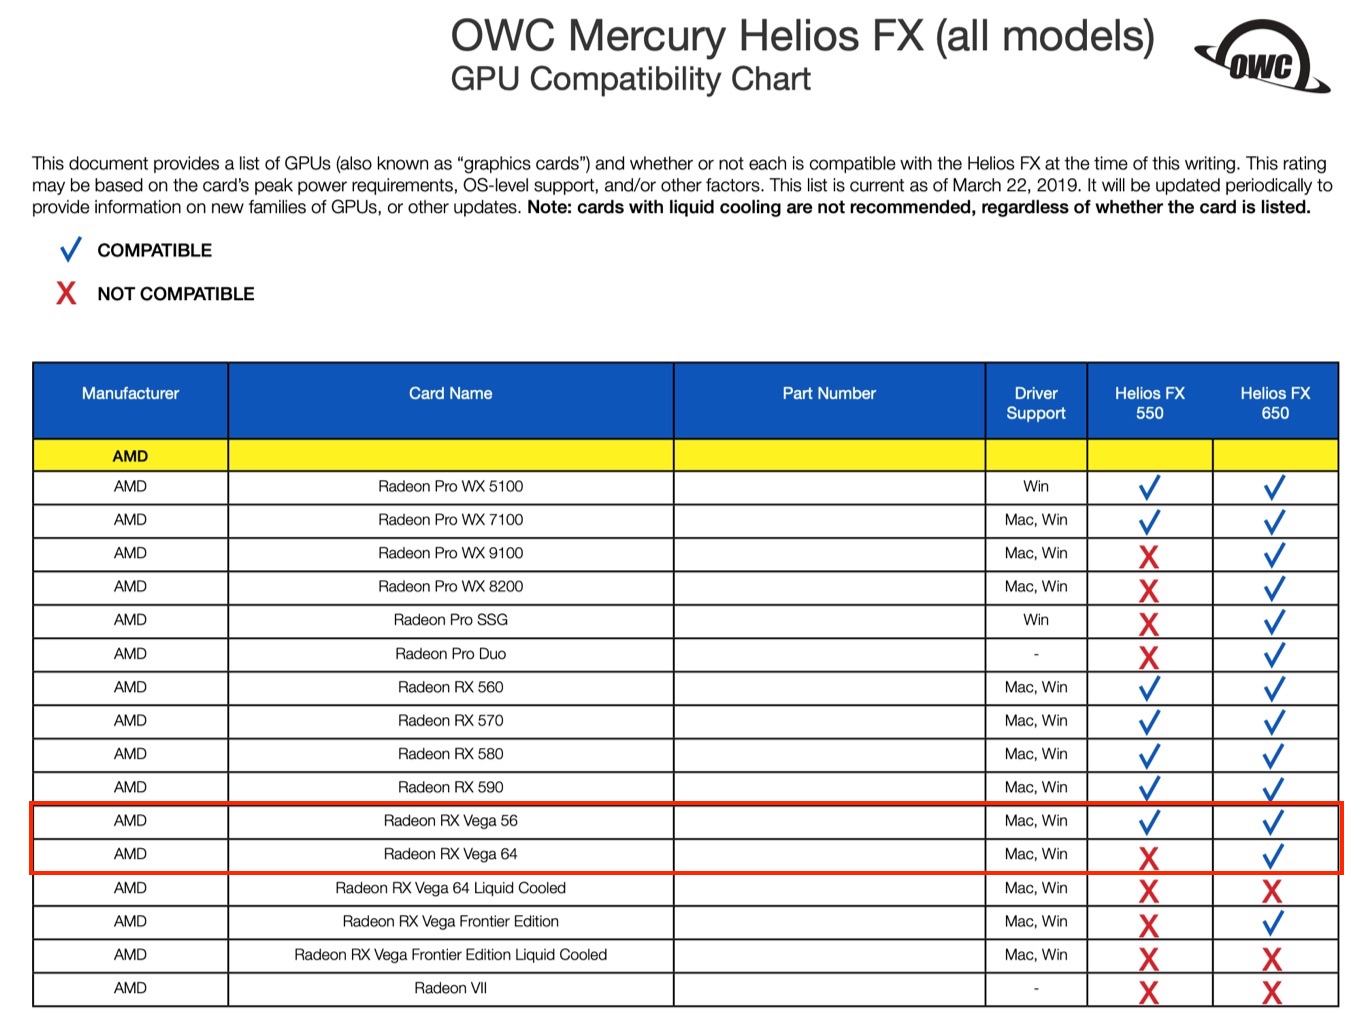 OWC Mercury Helios FX GPU Compatibility Chart